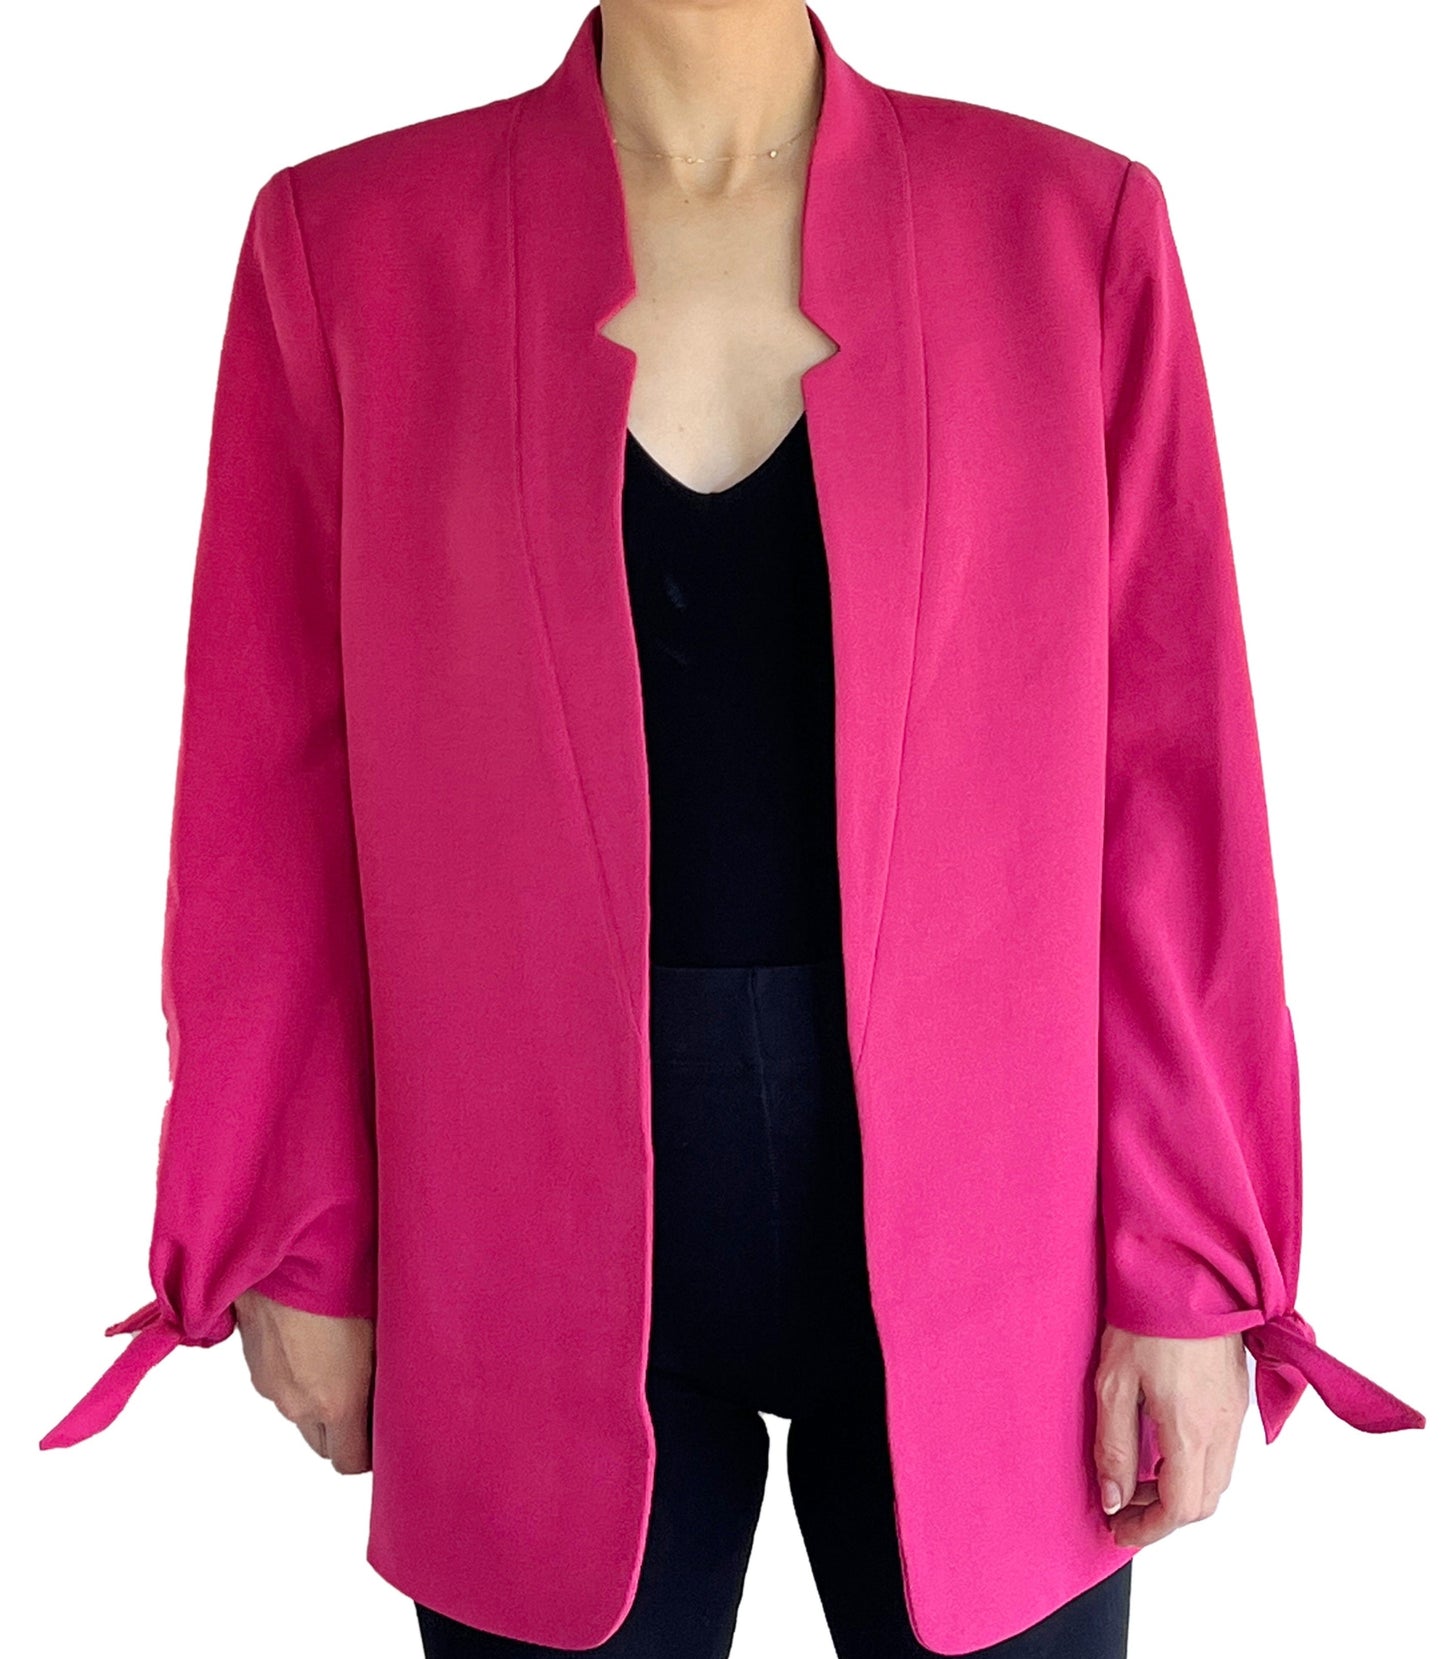 Tahari Blazer Hot Pink Size 12 SKU 000047